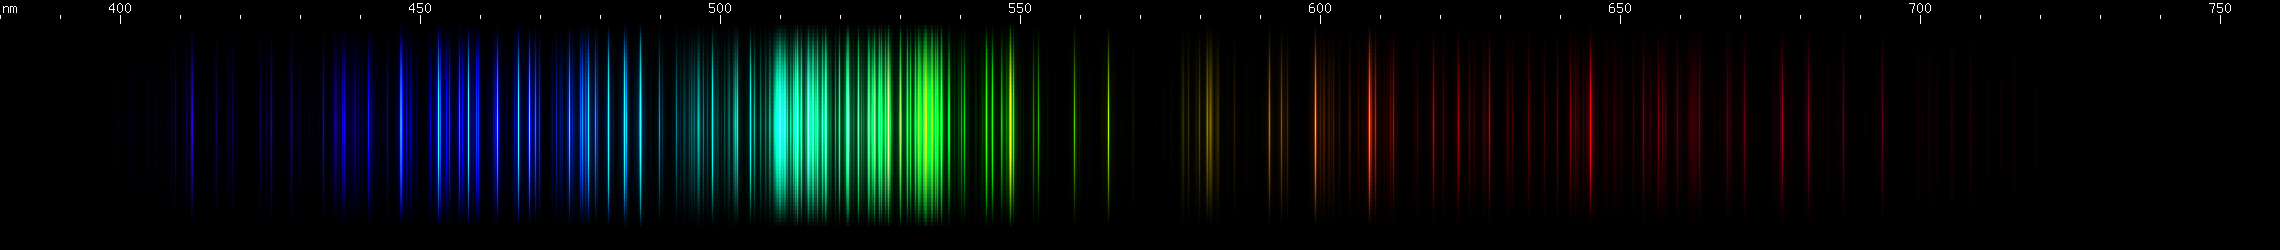 Spectral Lines of Cobalt